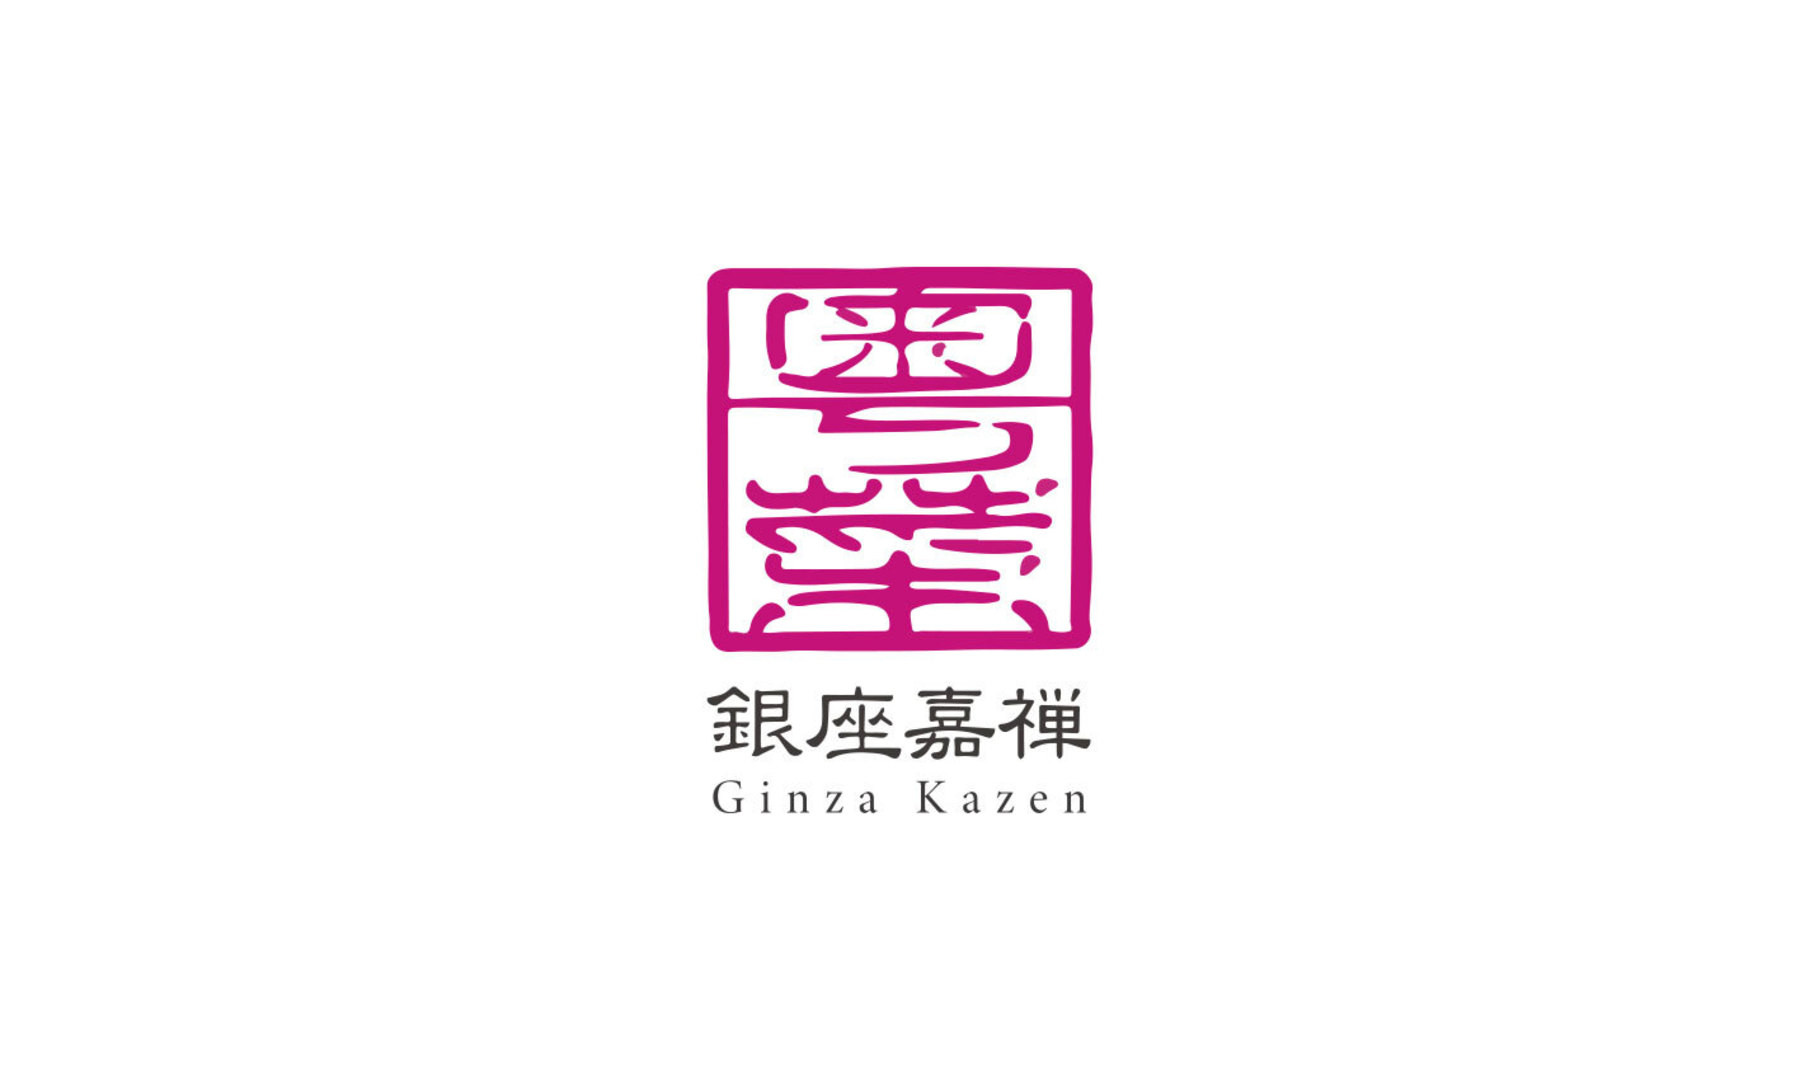 Ginza Kazen's image